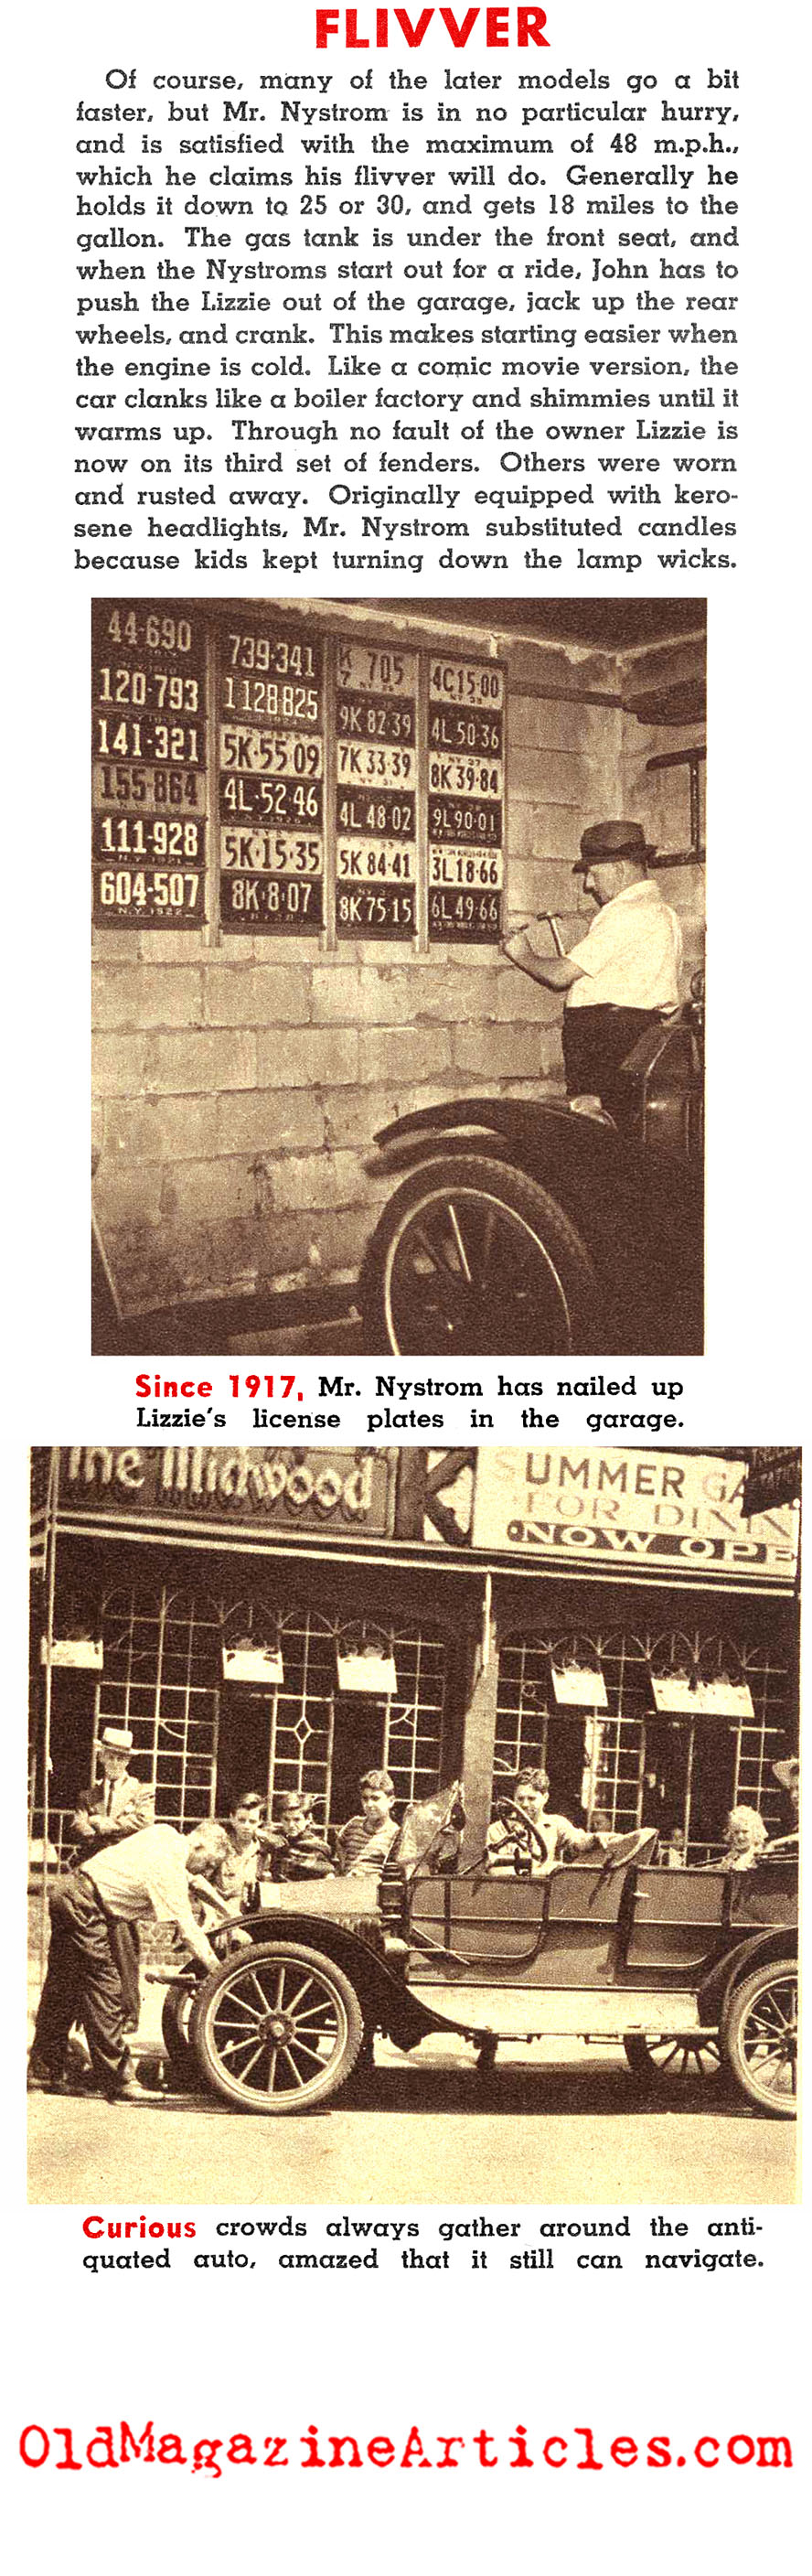 Mr. Nystrom's Car Won't Quit (Spot Magazine, 1941)